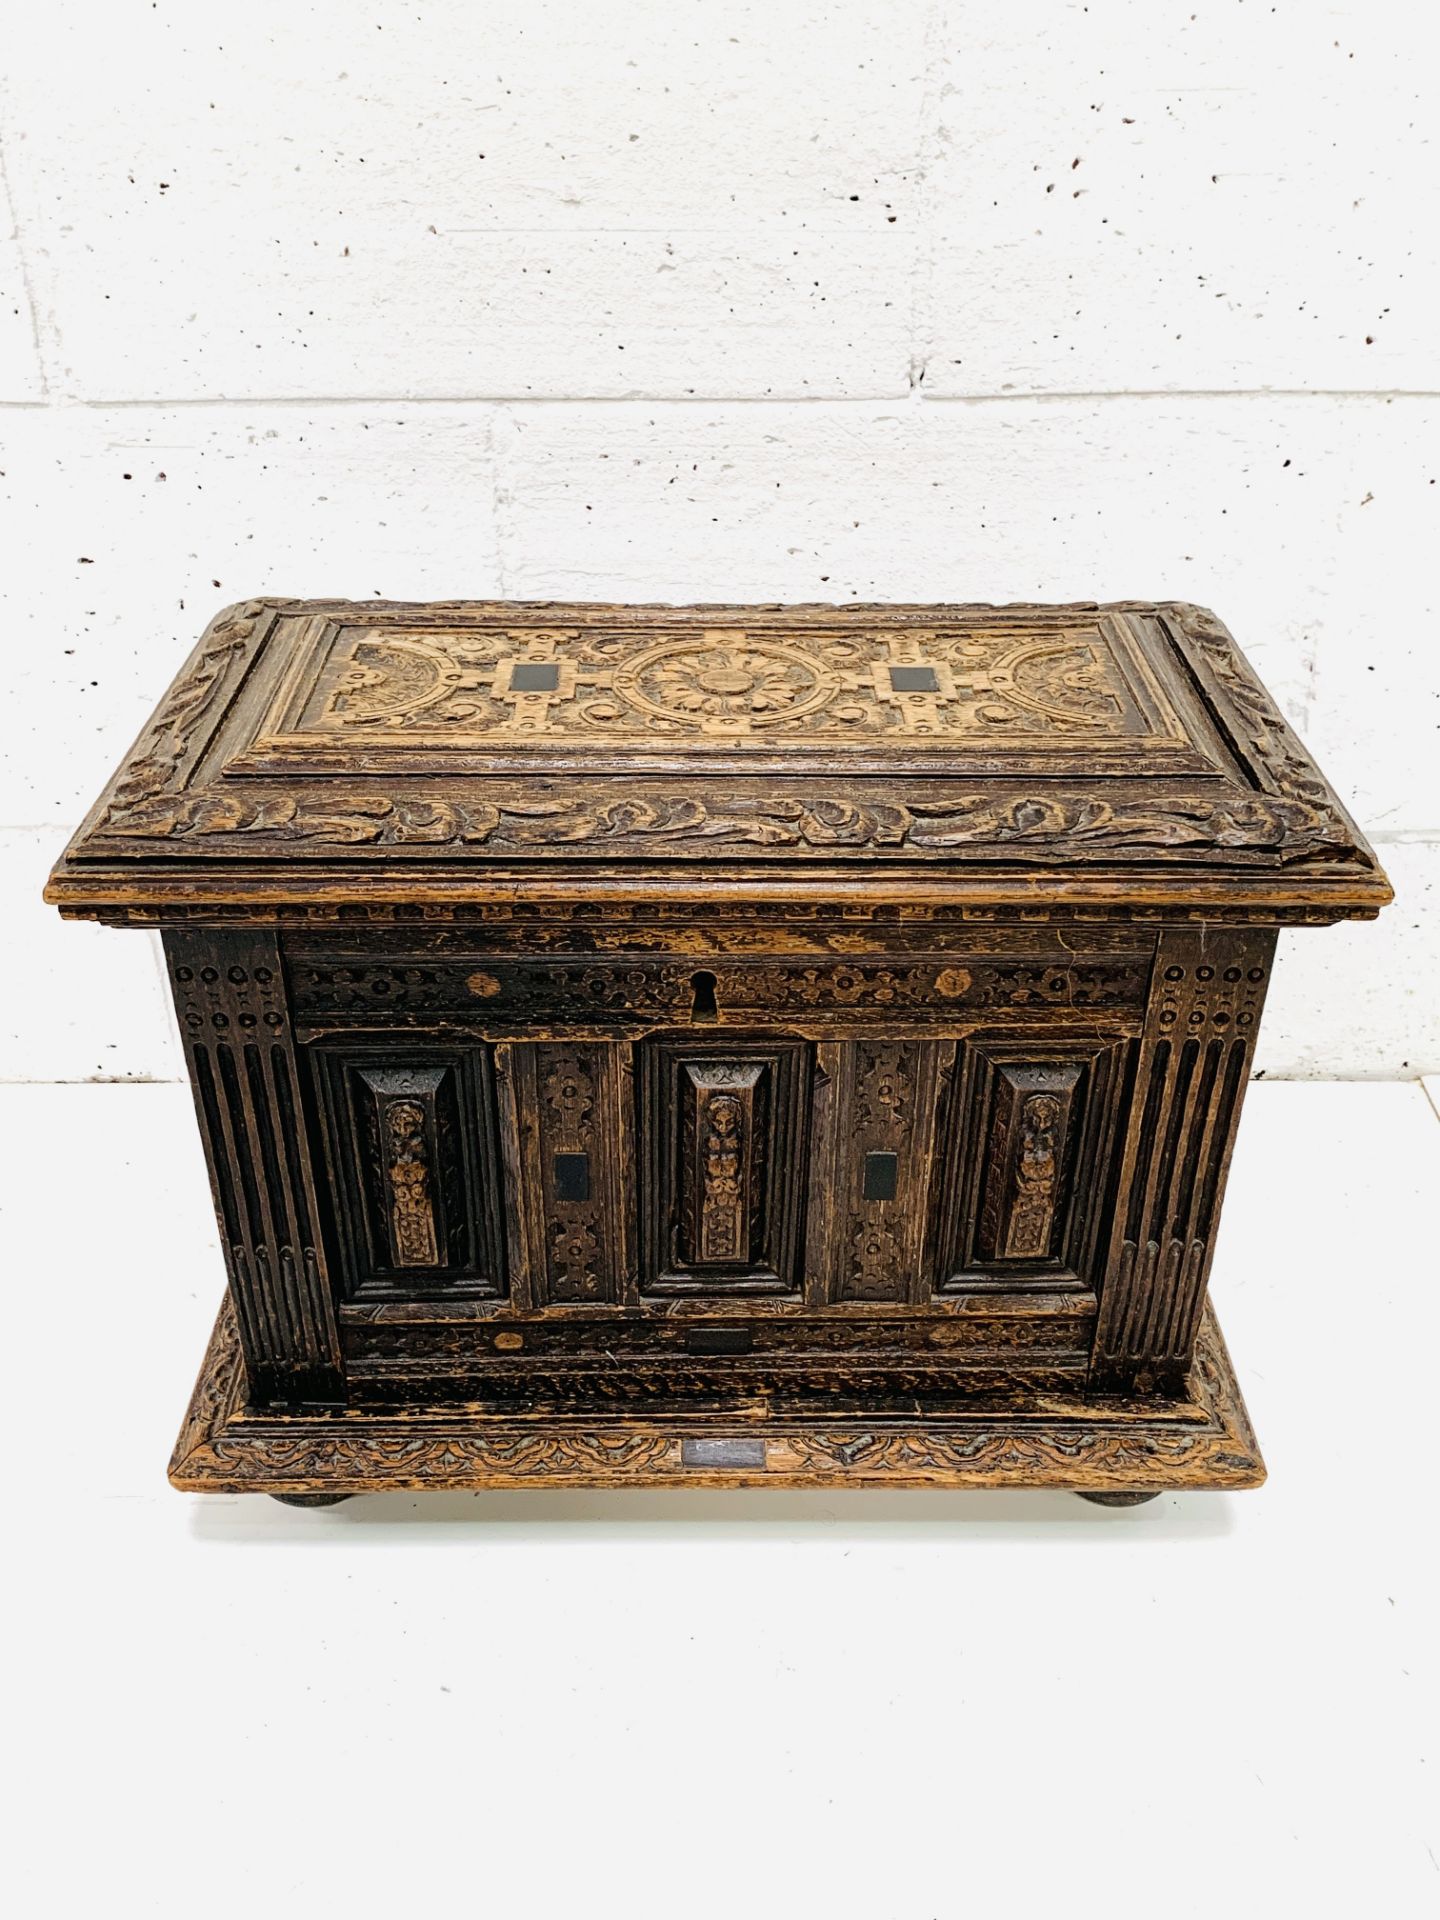 Carved oak casket with ebony inserts - Image 4 of 5